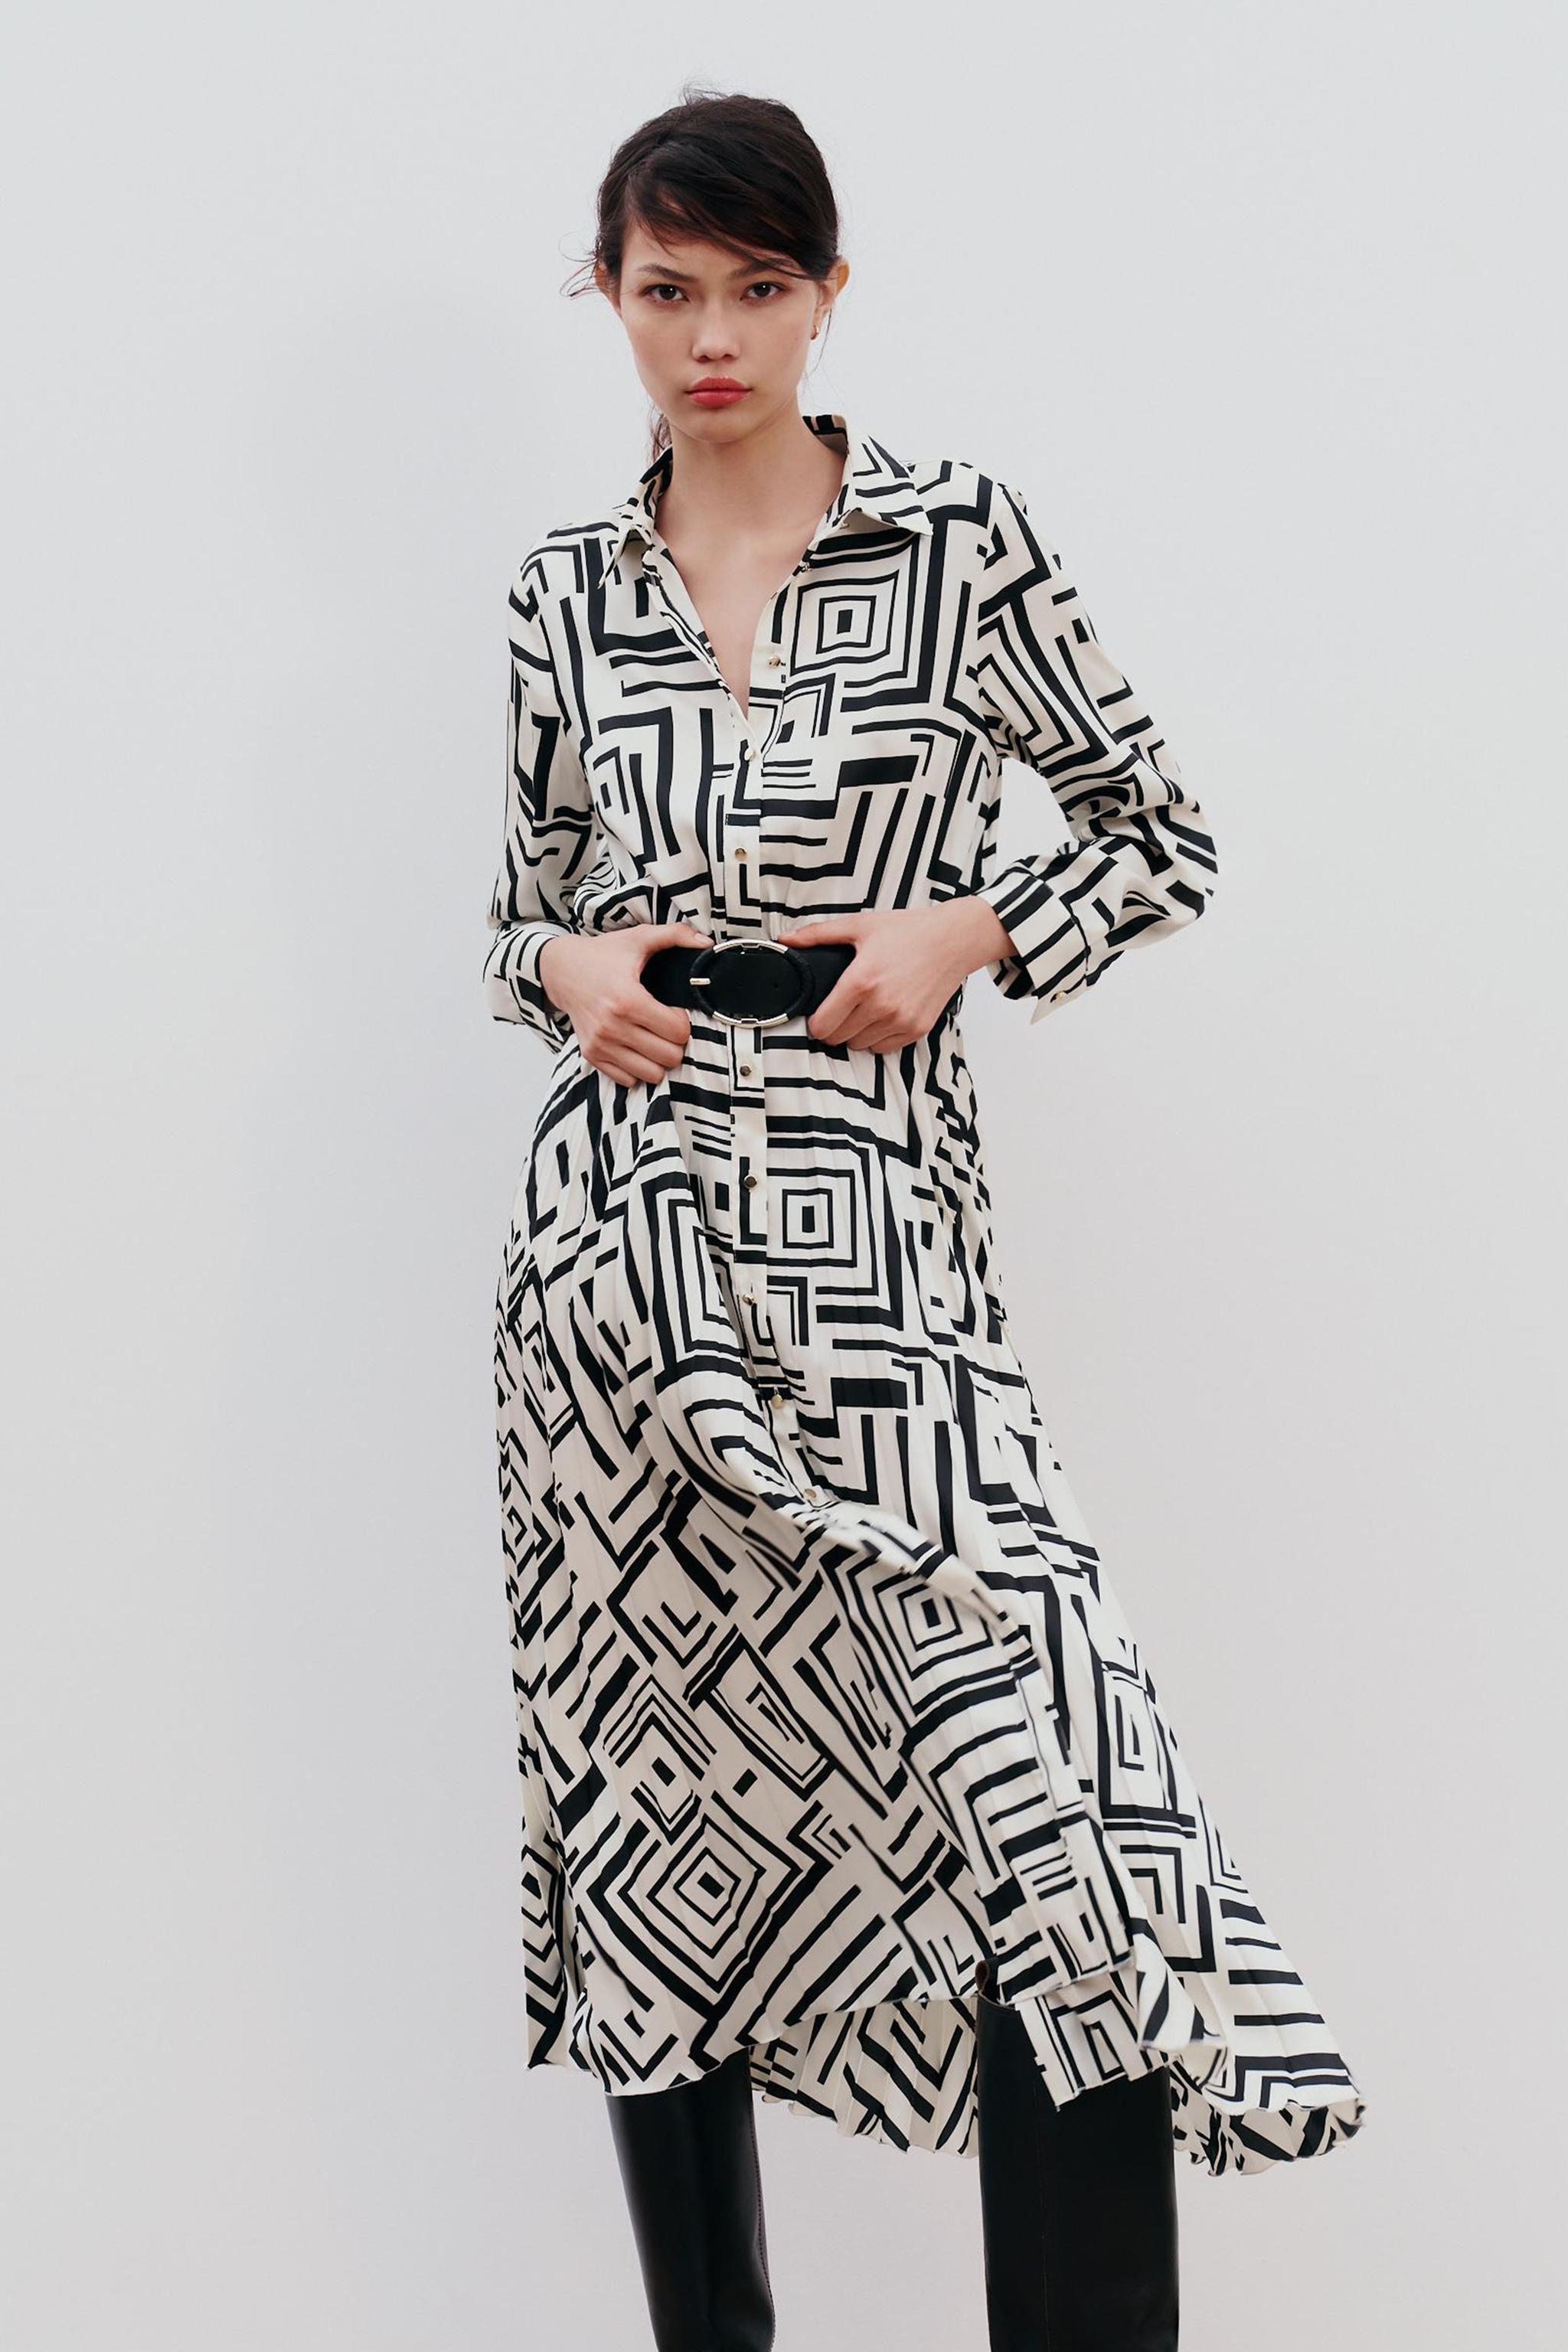 Zara - Zara Silk Corset Dress on Designer Wardrobe